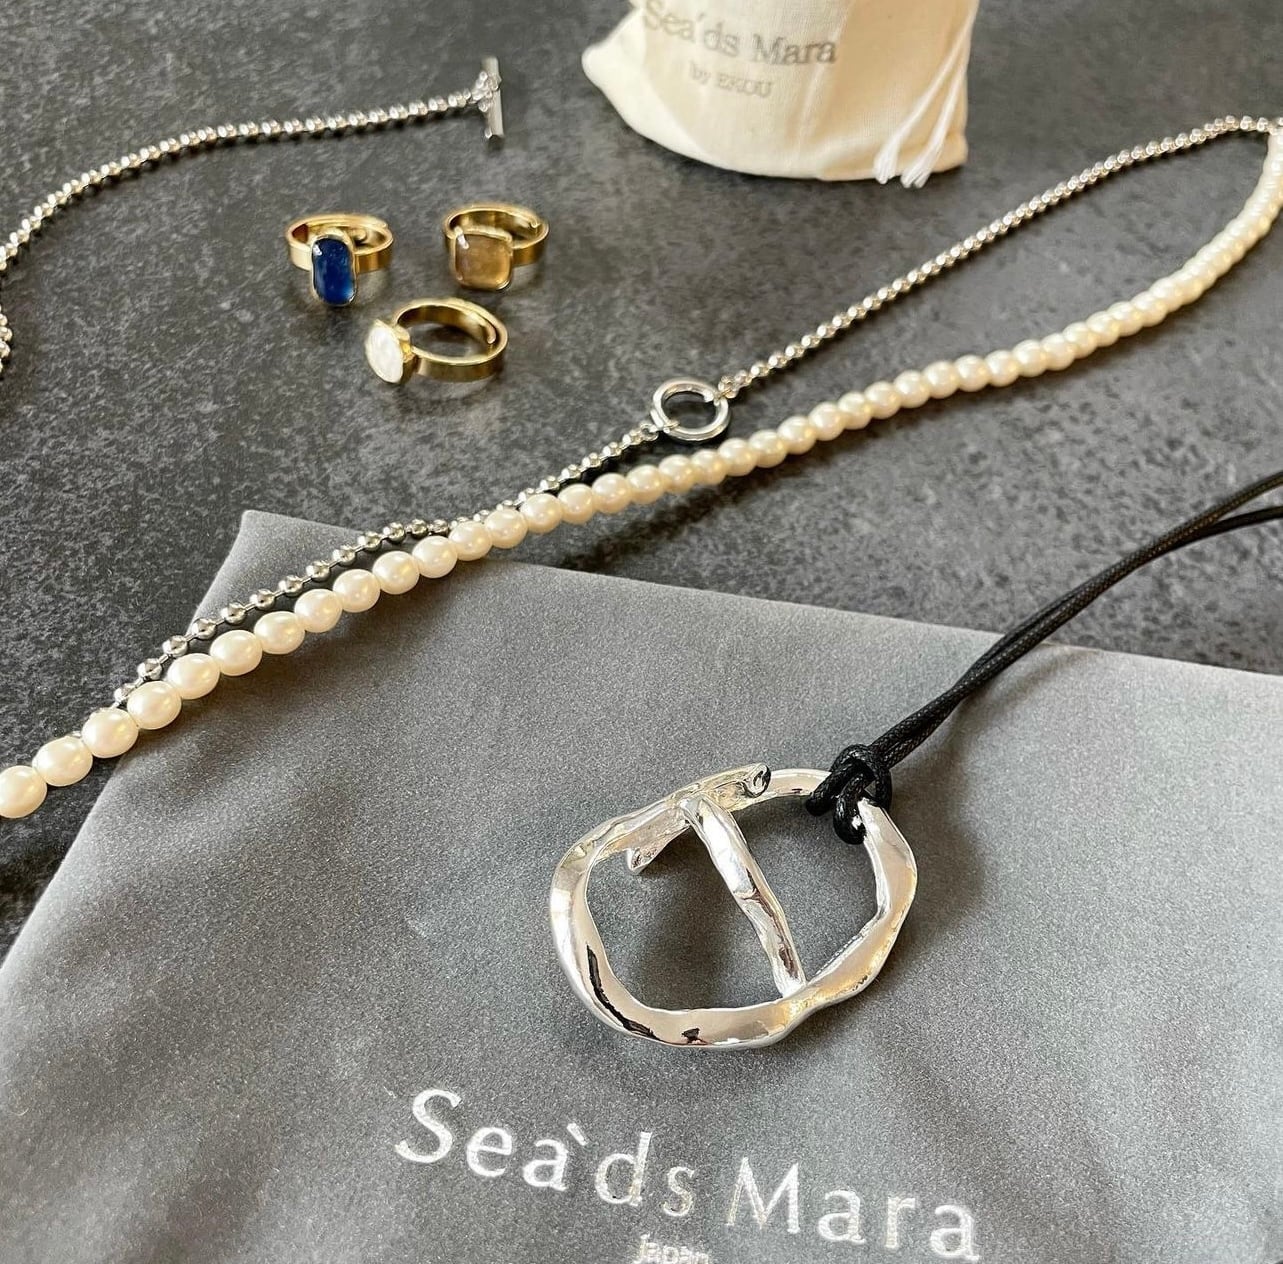 Sea'ds Mara シーズマーラ 2way ring necklace